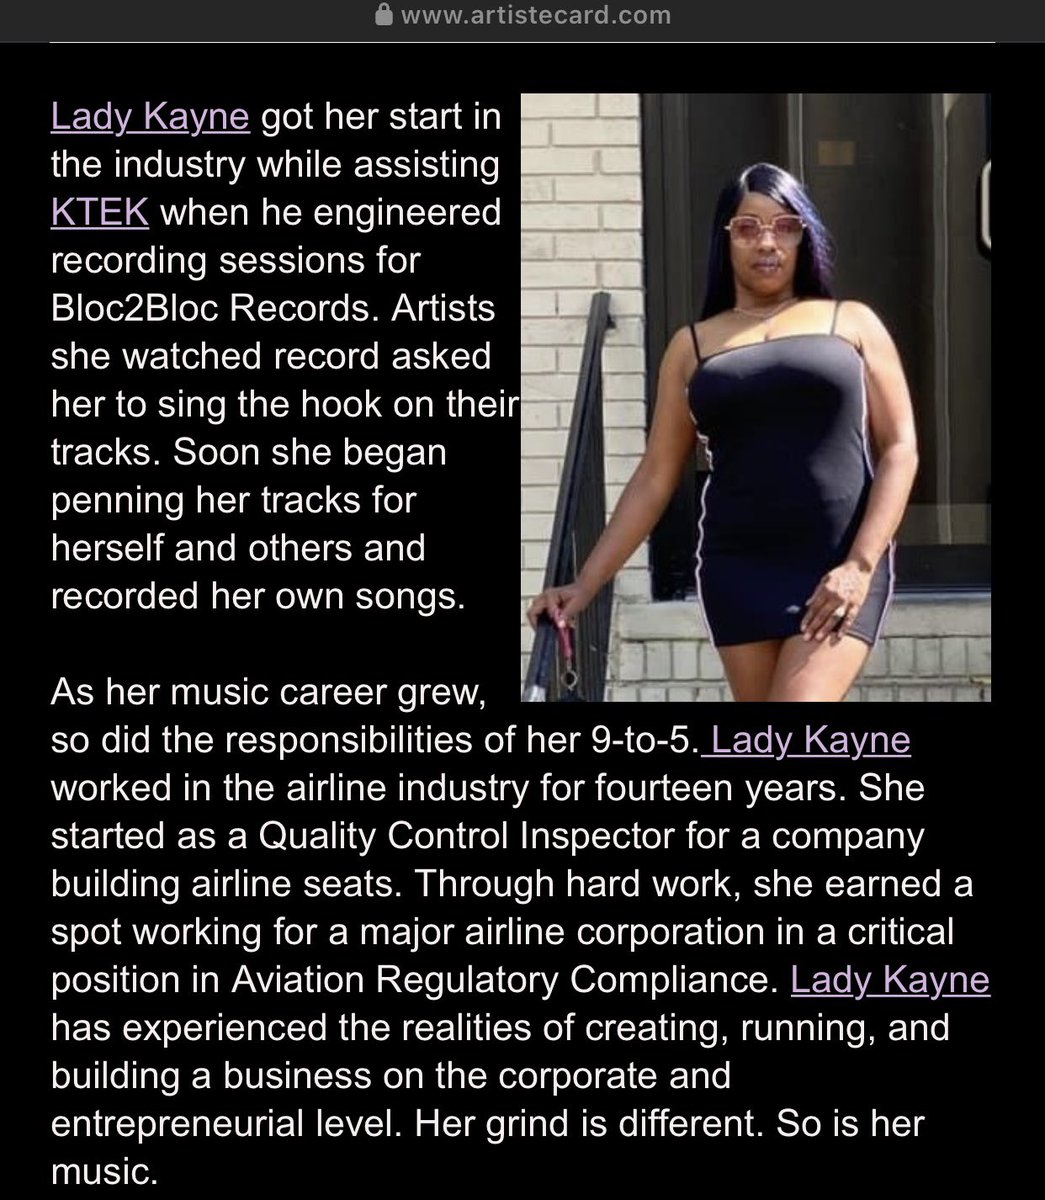 artistecard.com/ladykayne
👑🤑😍 #Lockin wit da #GrindQueen @ladykayne & become a part of #KayneGang! 🤑👑🌸
🌺🌸💕
•
•
•
#LadyKayne #HAVNIT #StudioLove #ILike #LookSweet #epk #ladykaynesrapstorytime

open.spotify.com/artist/1dHv82S…